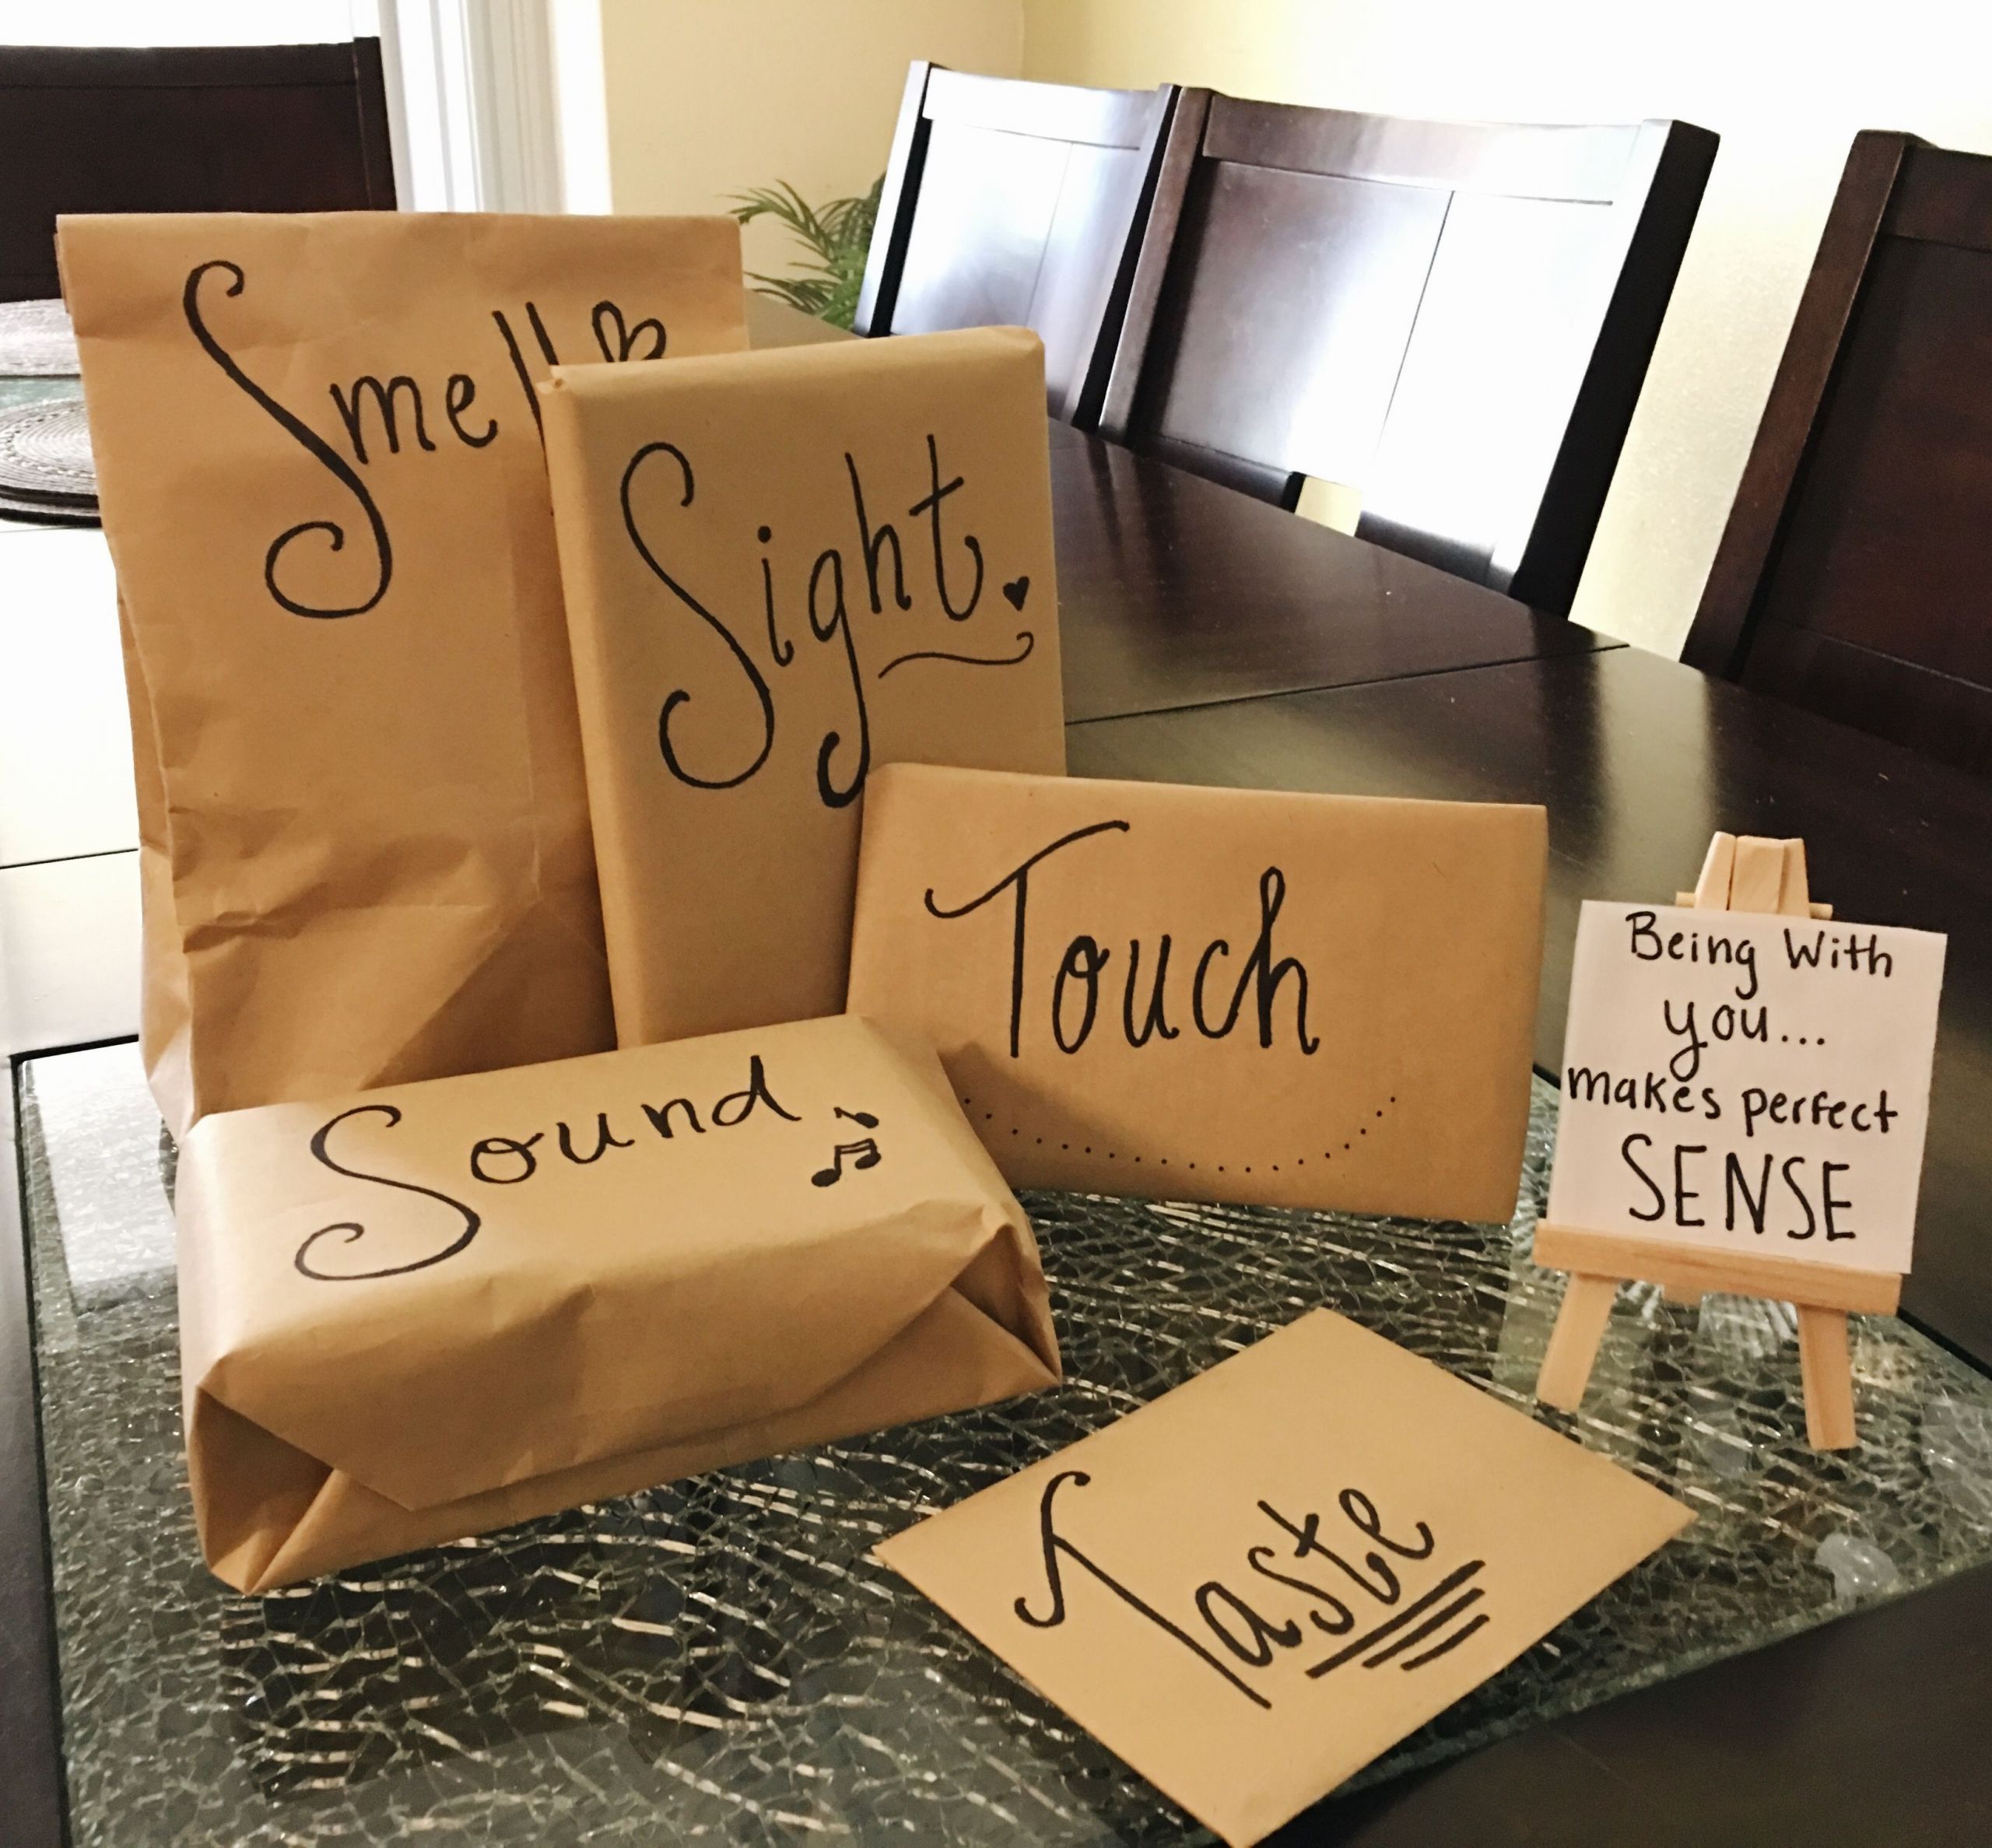 Cute Gift Ideas For Your Boyfriend
 Cute ideas for your boyfriend